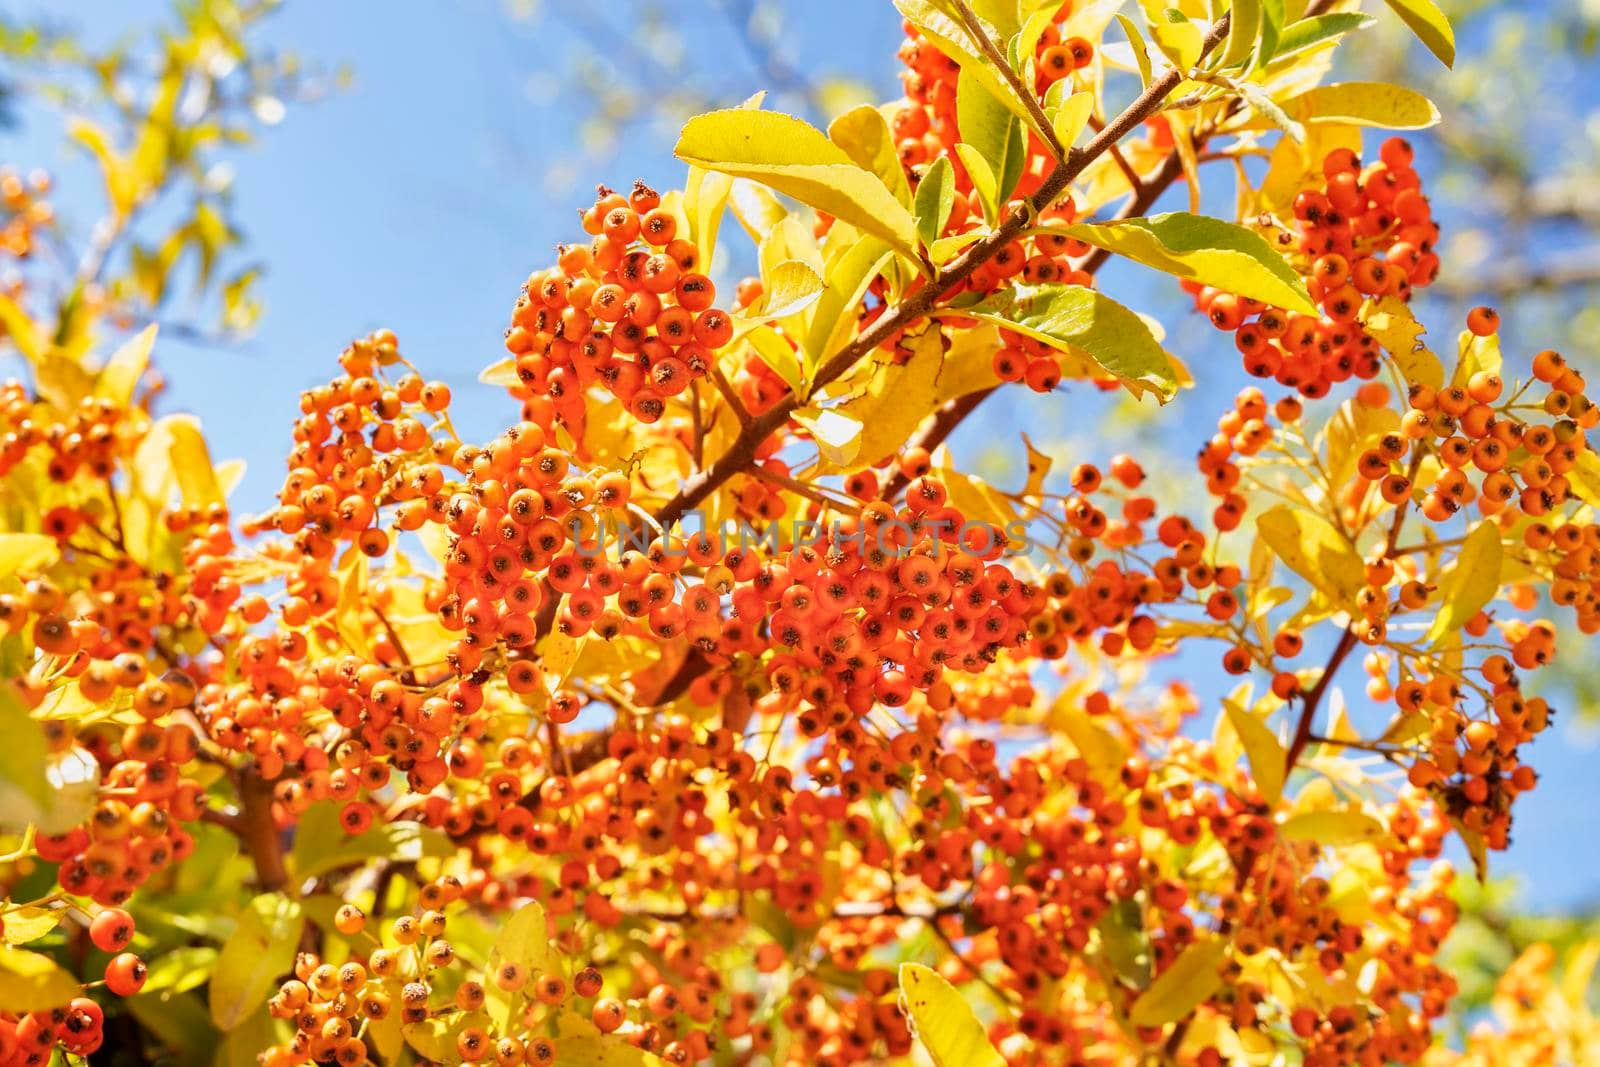 Autumnal orange berries of pyracantha by victimewalker